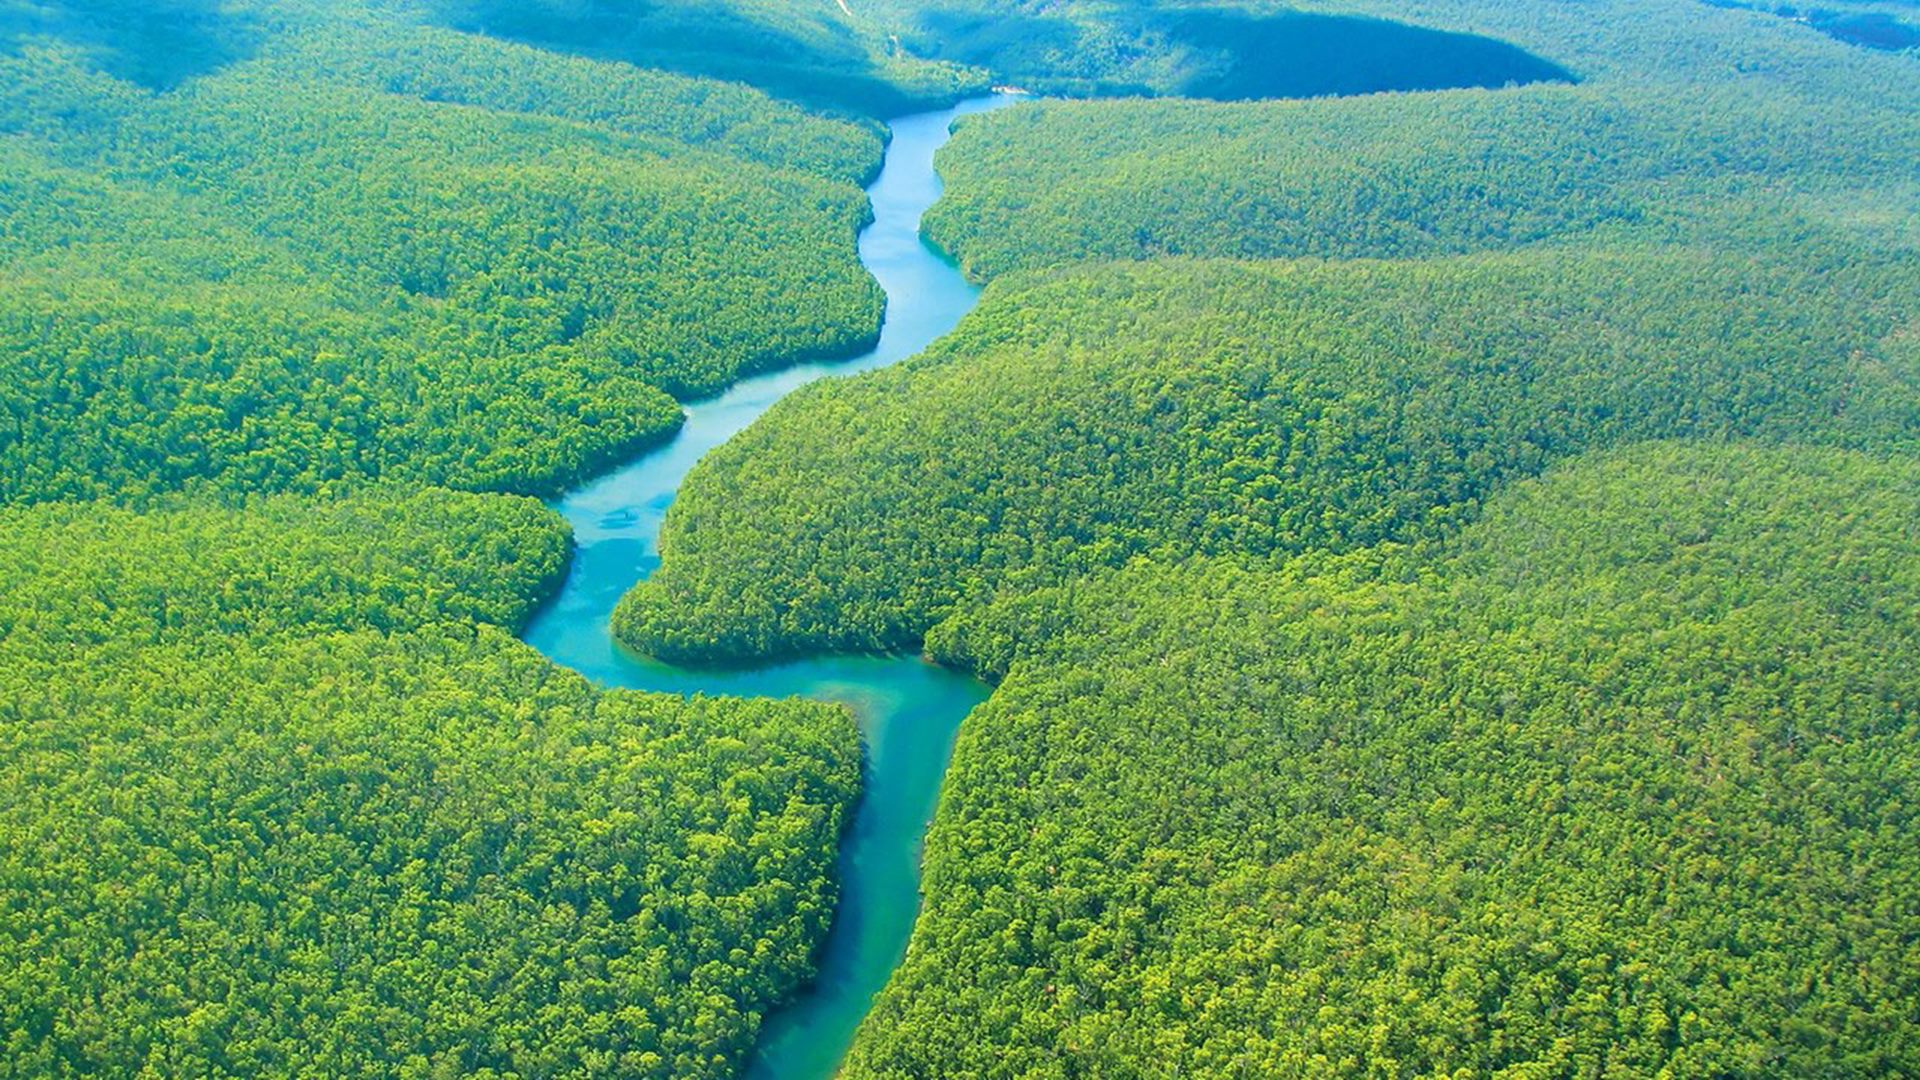 Amazon Rainforest Wallpaper For Mac #VFj | Hd nature wallpapers, Nature  wallpaper, Nature photography